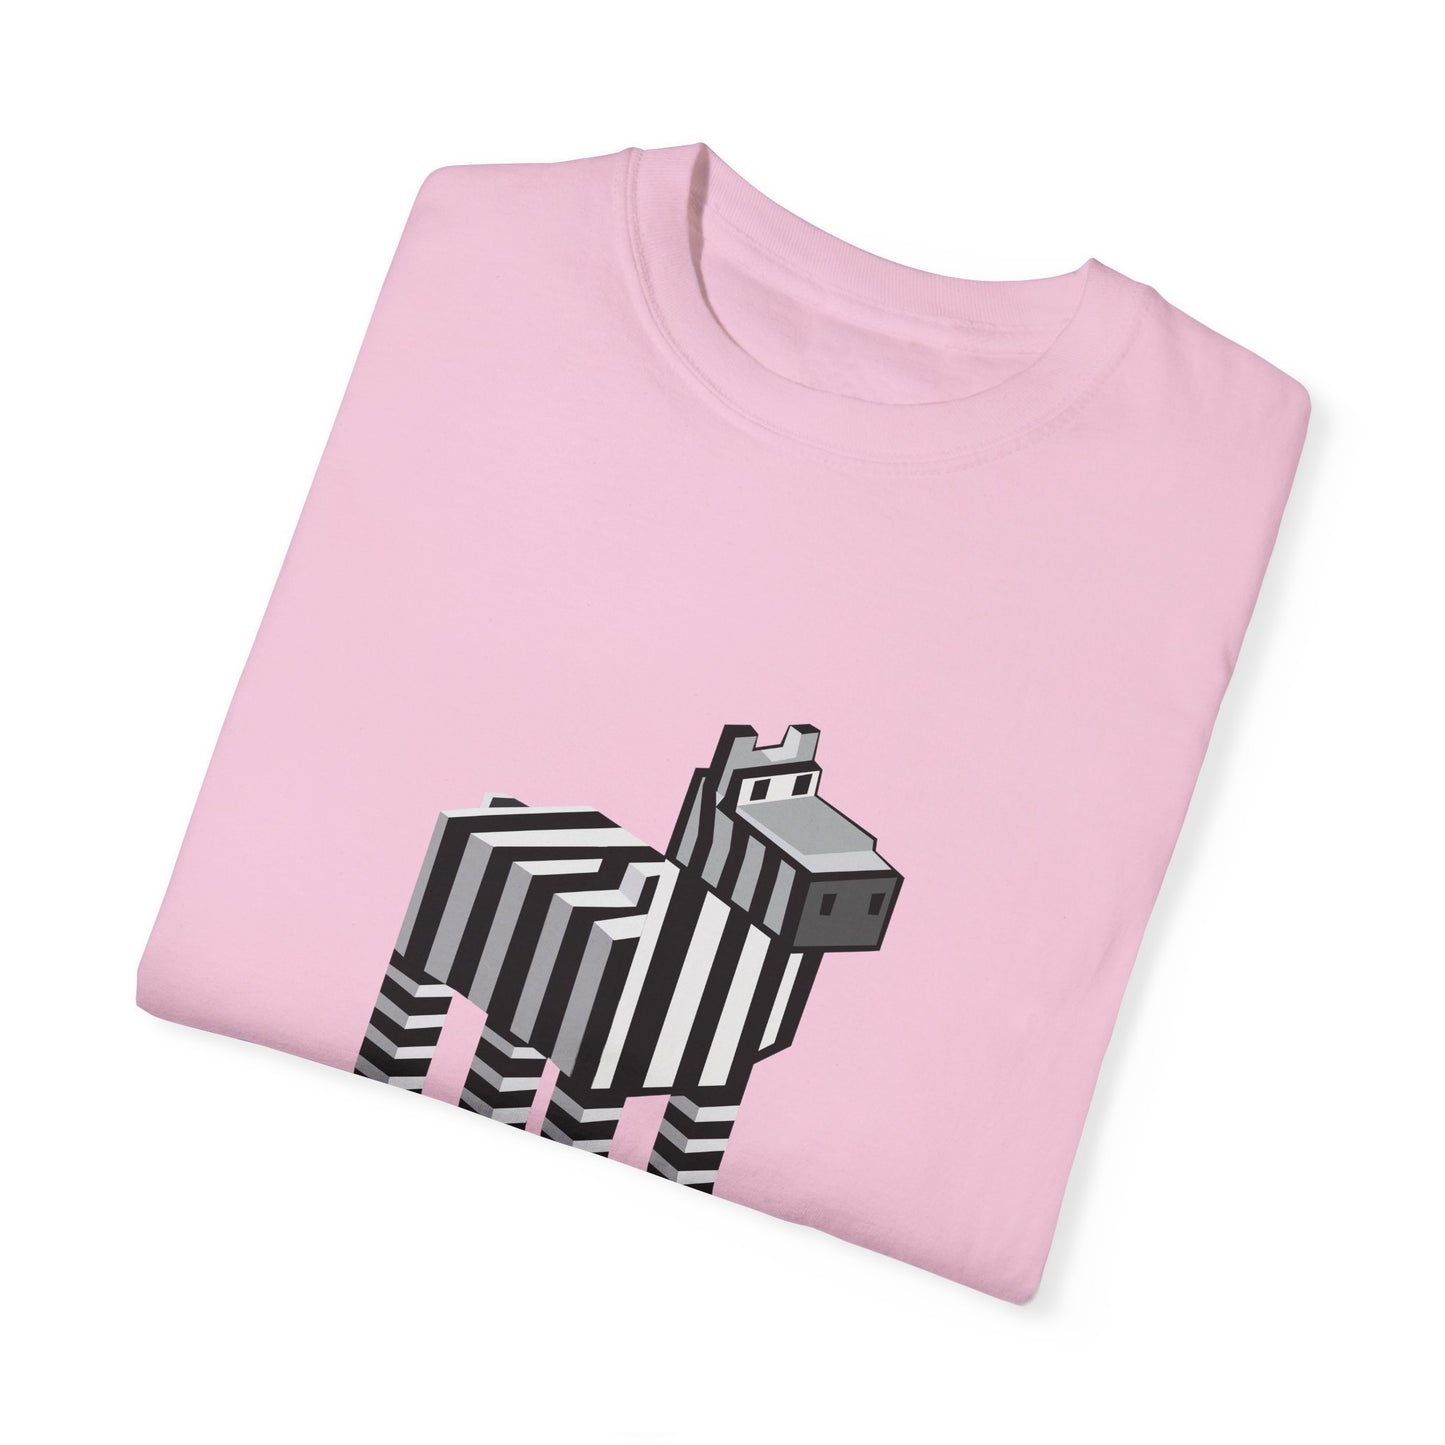 Pixel Zebra T-Shirt